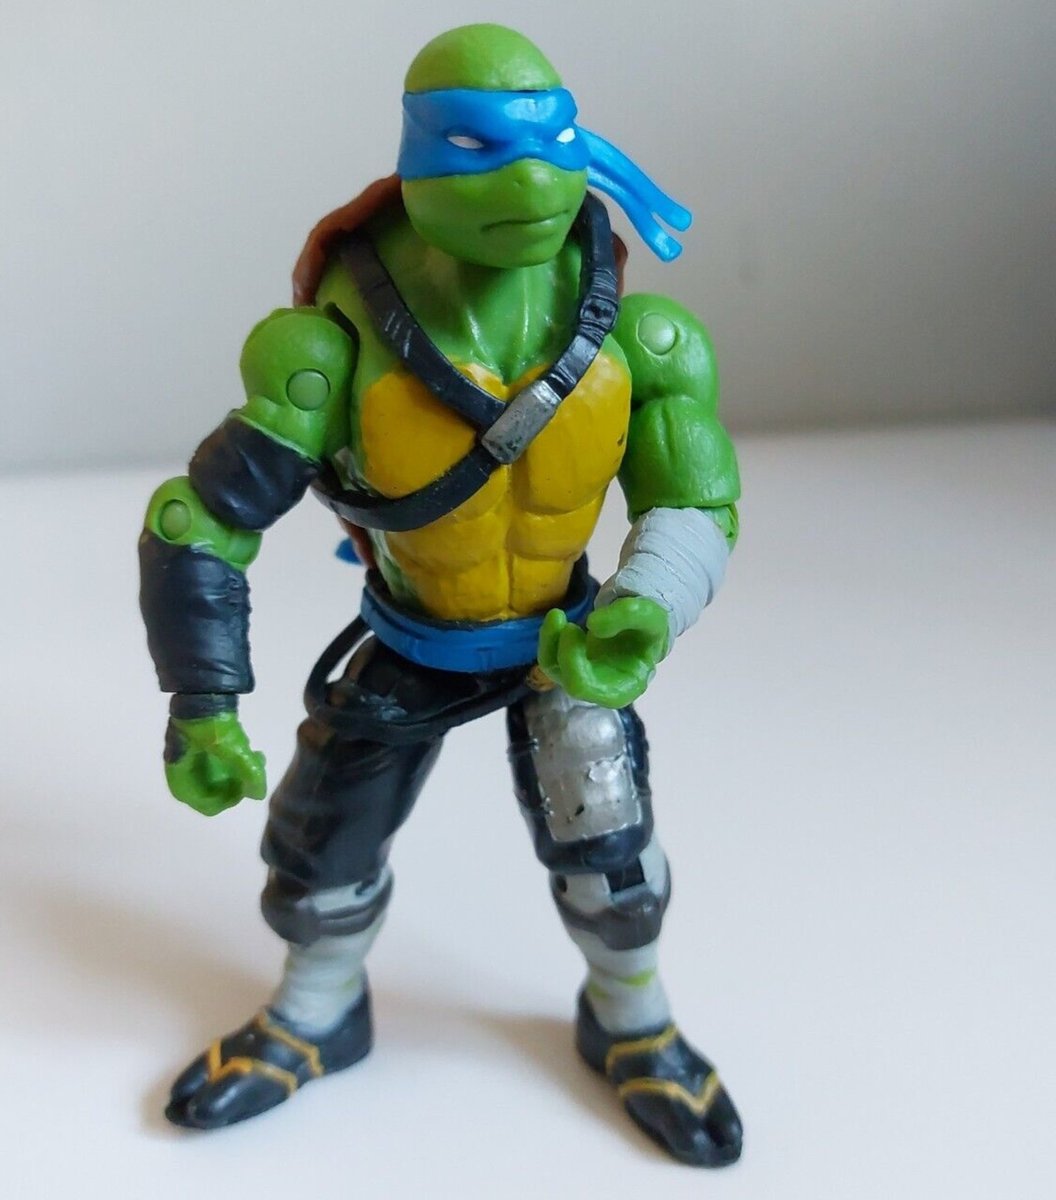 Leonardo, 2015, Playmates, Teenage Mutant Ninja Turtles, Out Of The Shadows.
#TMNT #toys #toy #toysforsale #toys4sale #actionfiguresforsale #actionfigure #80stoys  #hallstoybox 
ebay.com/itm/1450594521…